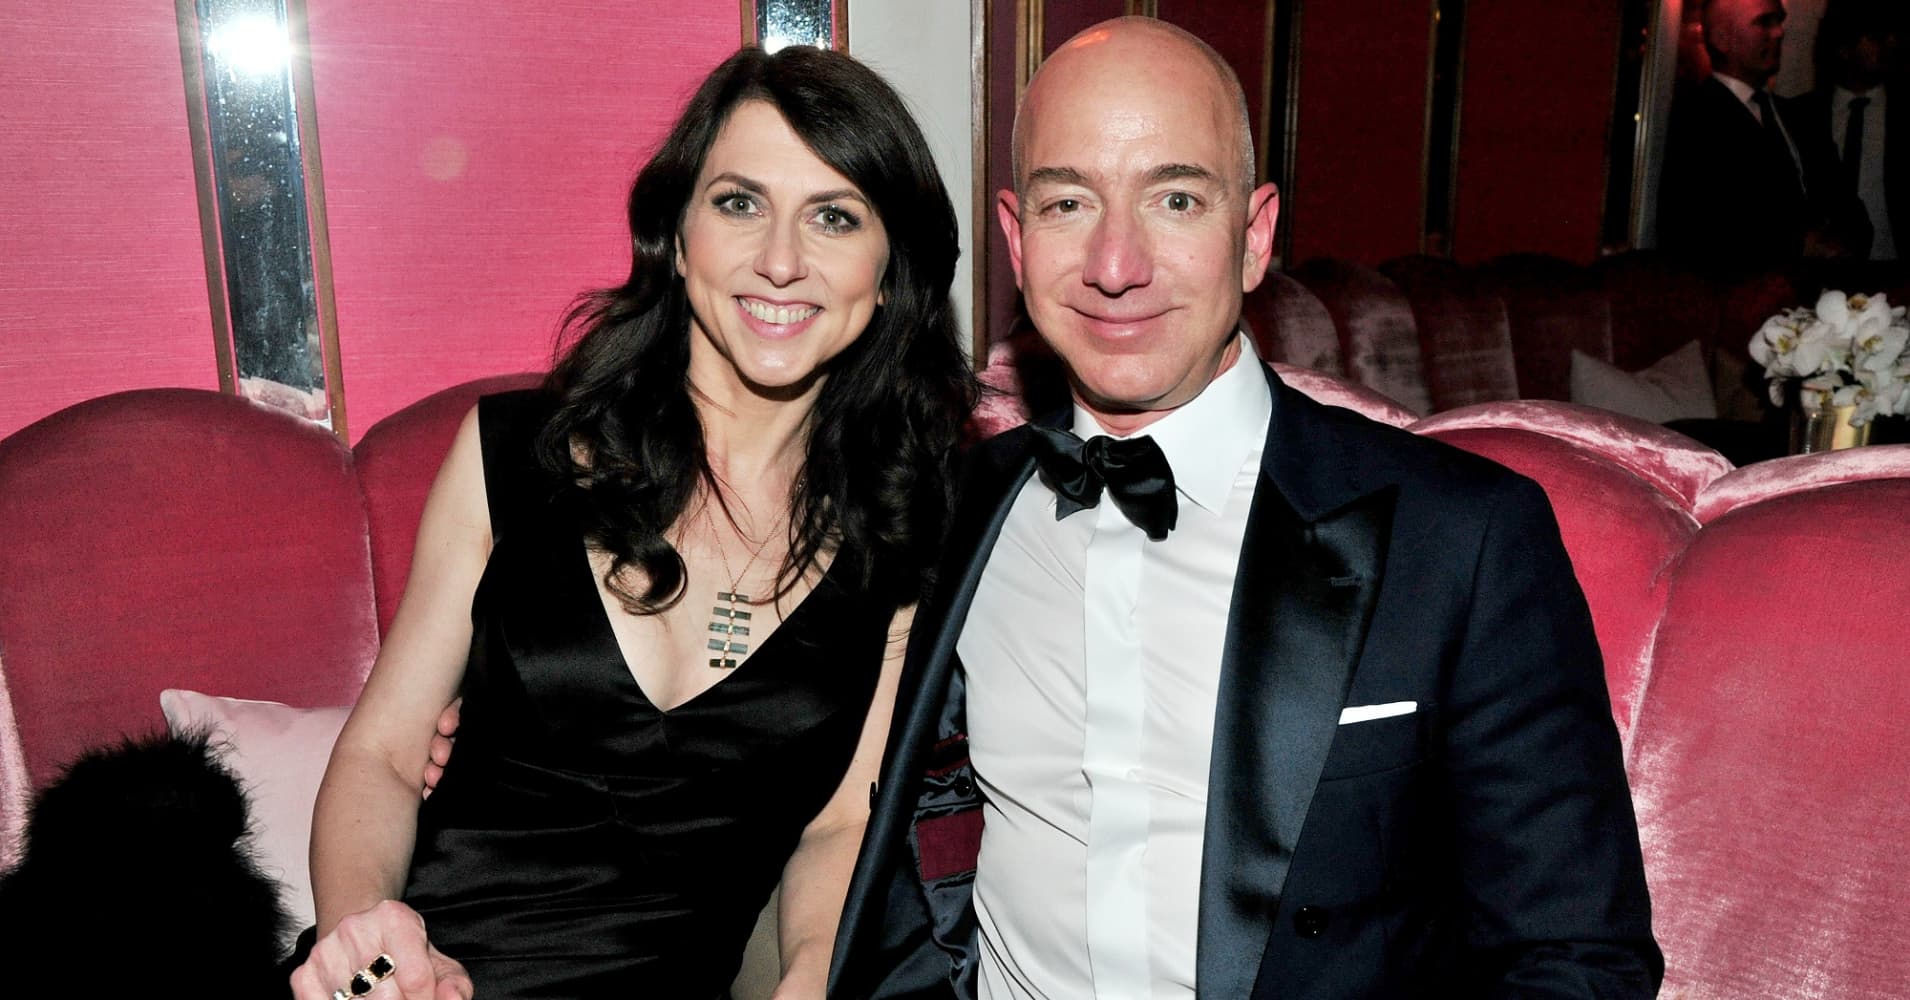 Image result for McKenzie Bezos becomes worldâs fourth richest woman after record breaking divorce settlement with ex-husband Jeff Bezos